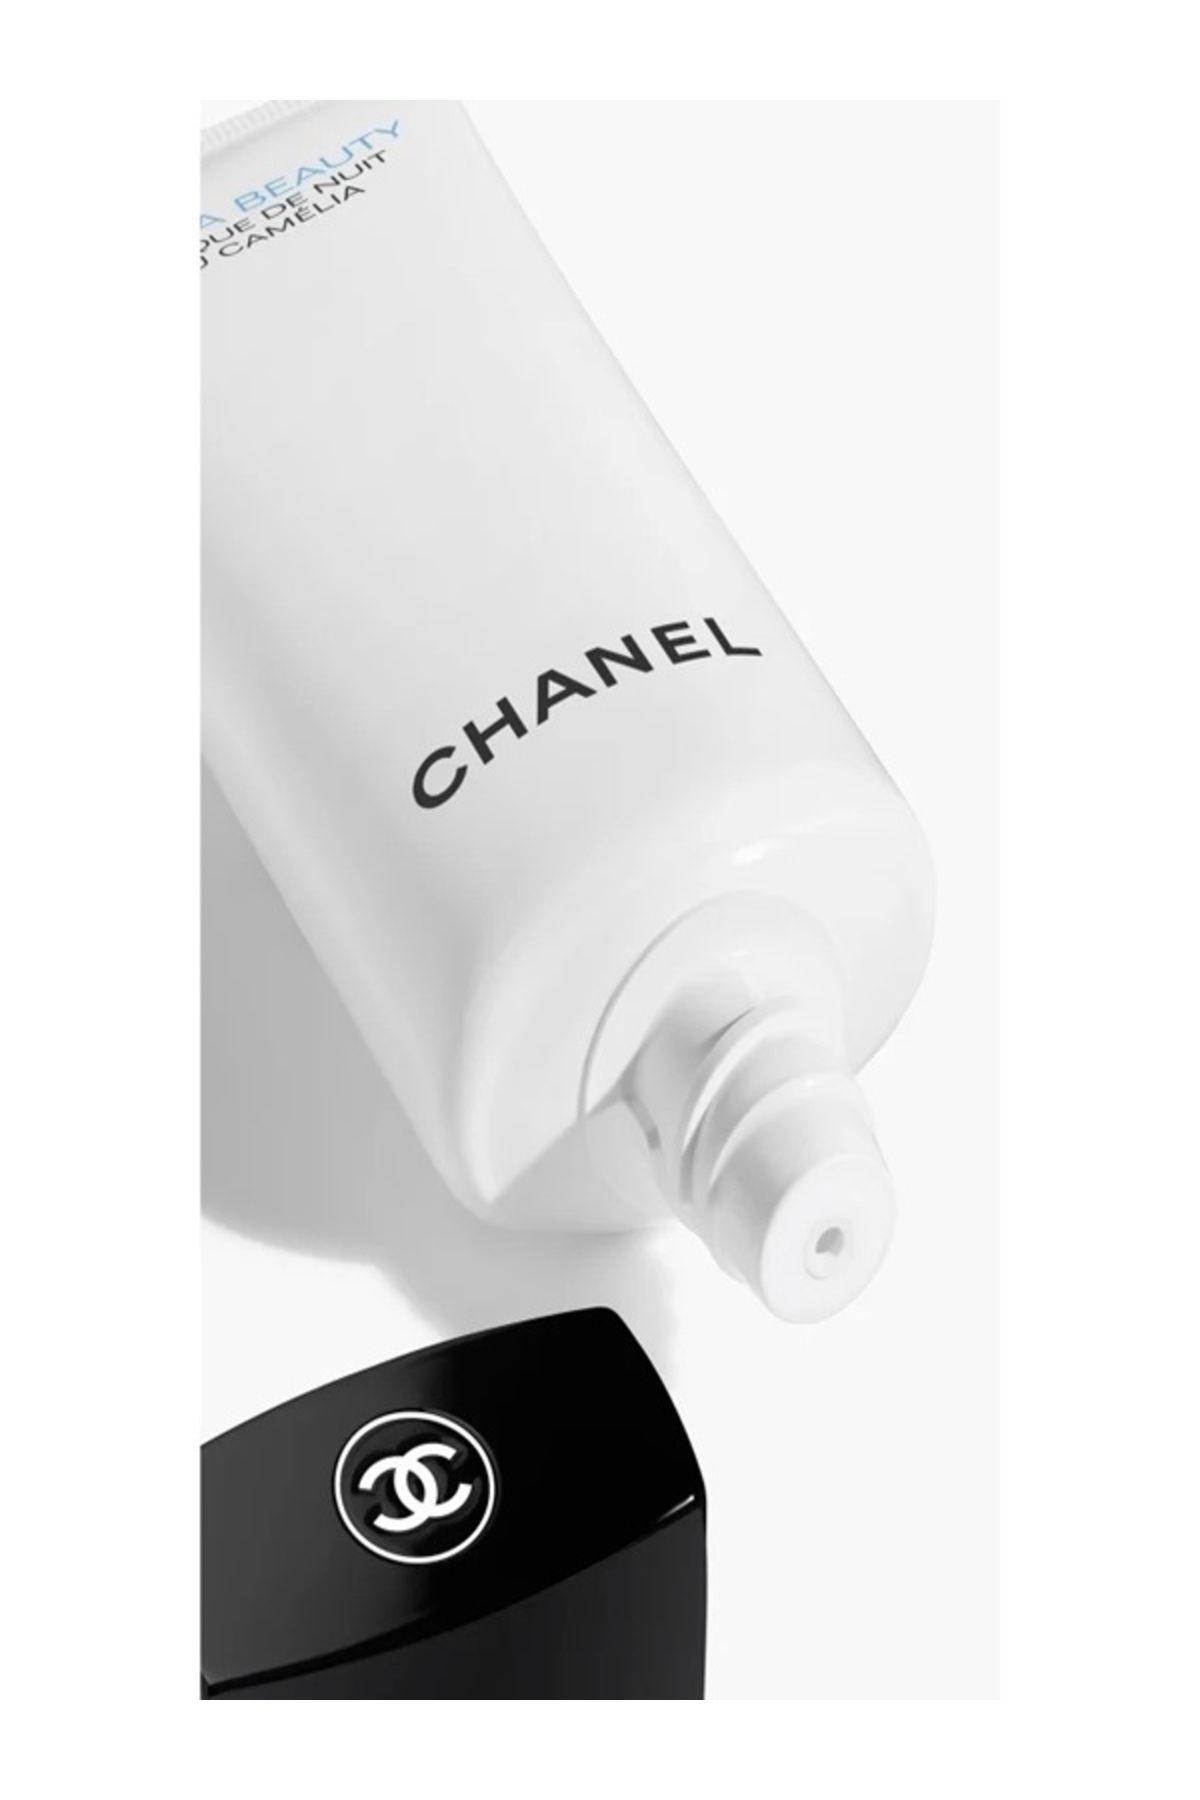 Chanel ماسک شبانه عصاره کاملیا HYDRA BEAUTY آبرسانی عمیق و اکسیژن رسانی ضد پیری 100میل